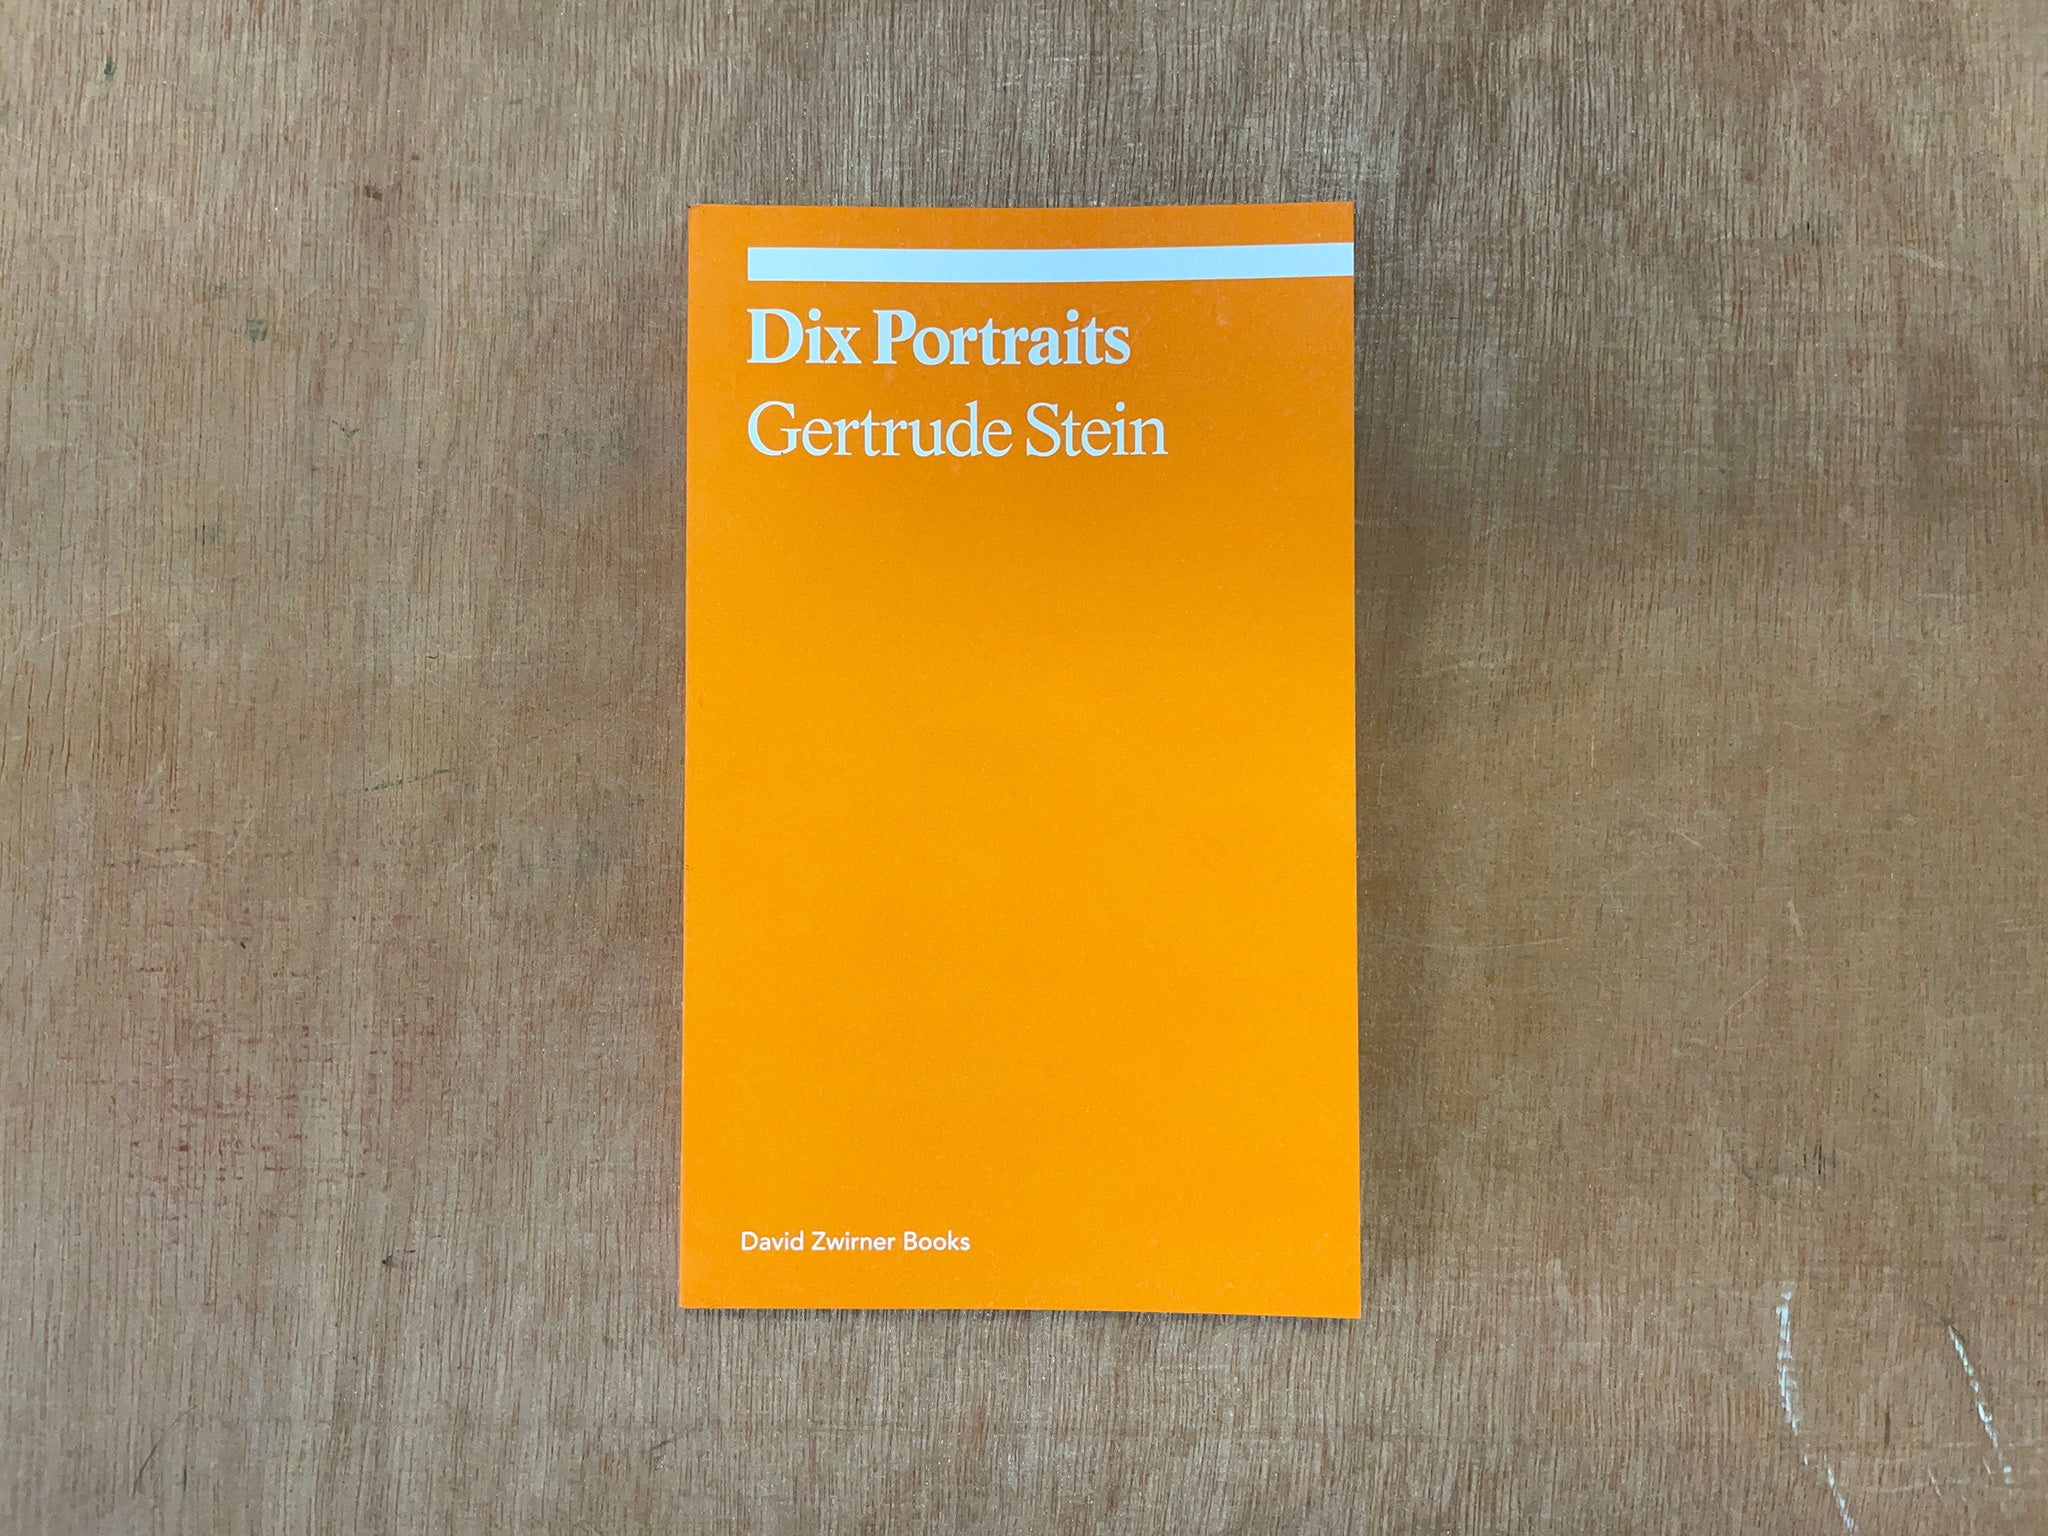 DIX PORTRAITS by Gertrude Stein